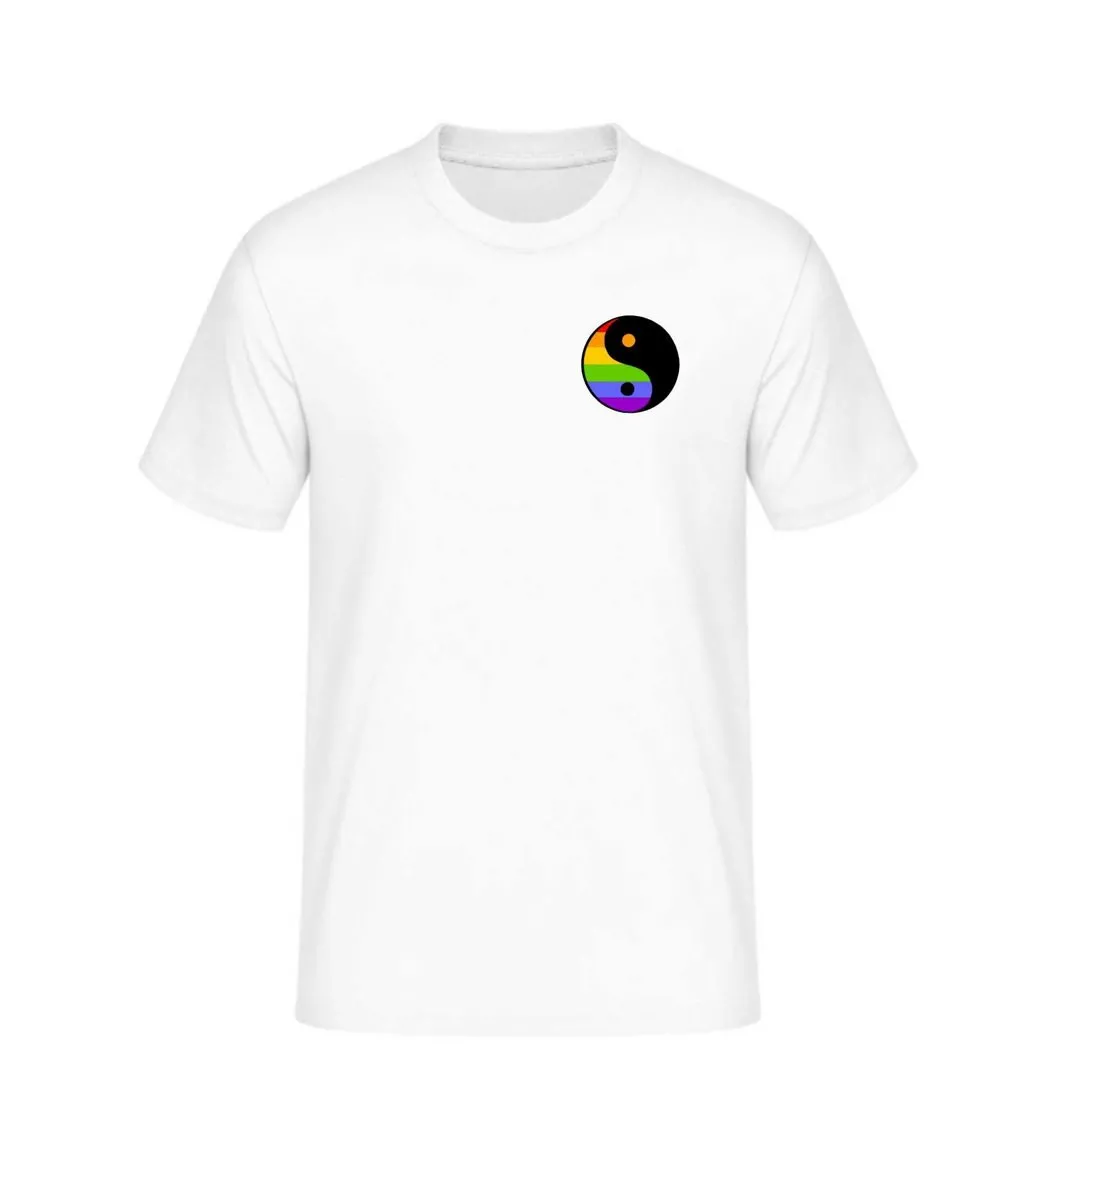 T-shirt Ying Yang regenboog wit | Pride